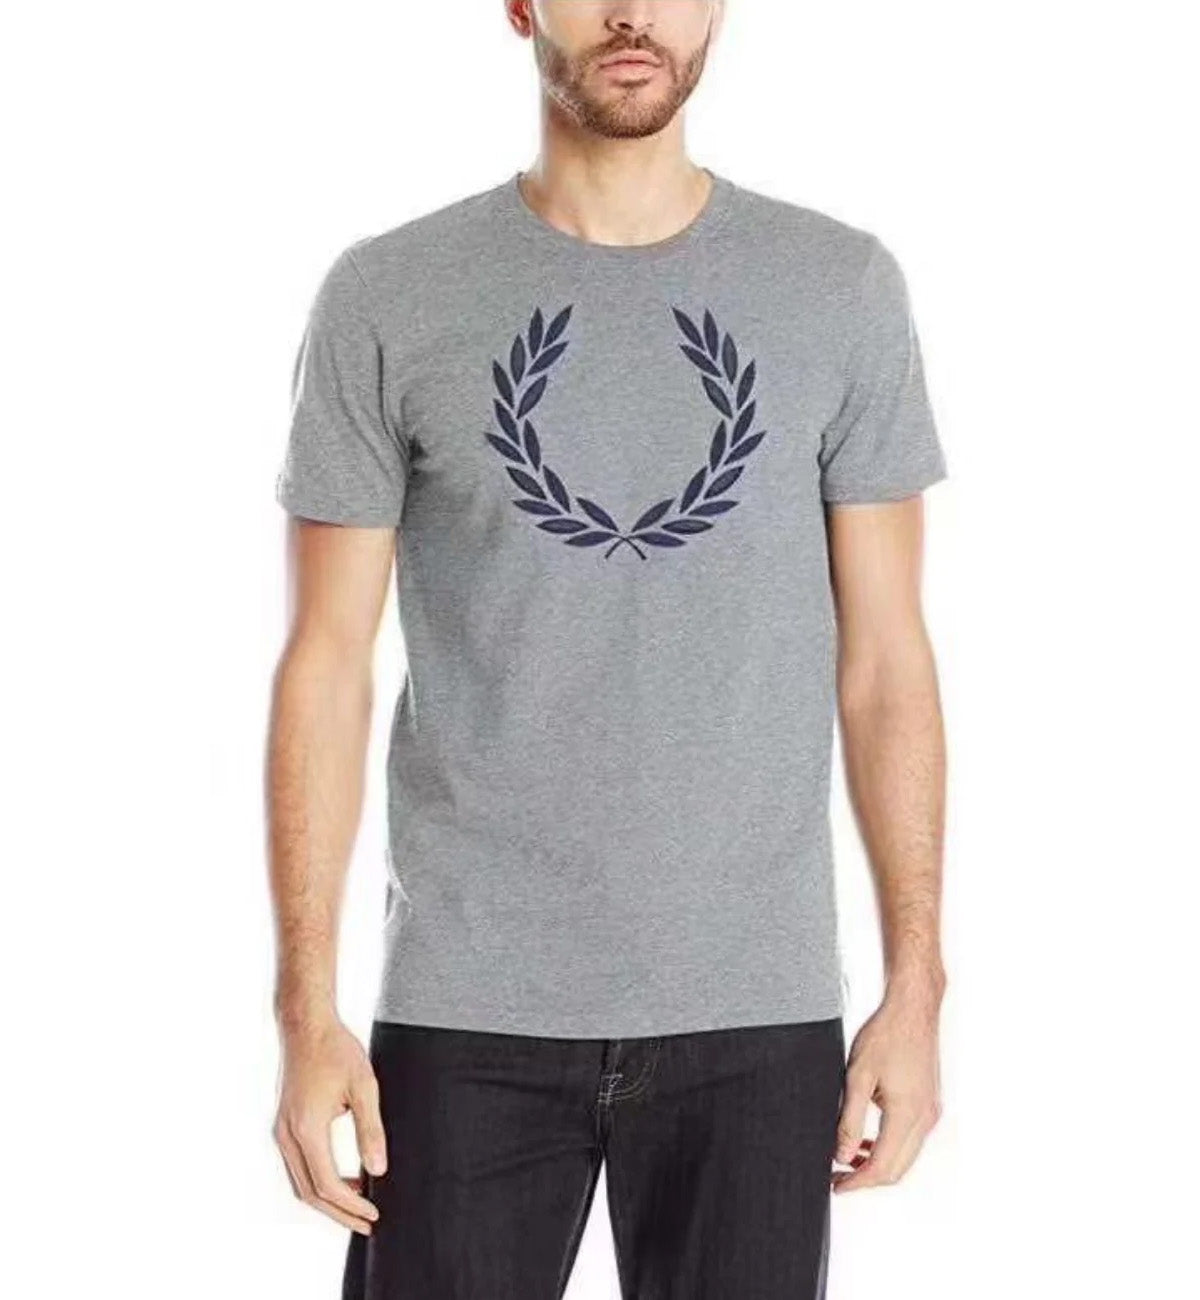 Fred Perry Blurred Laurel Wreath T-Shirt (Grey)